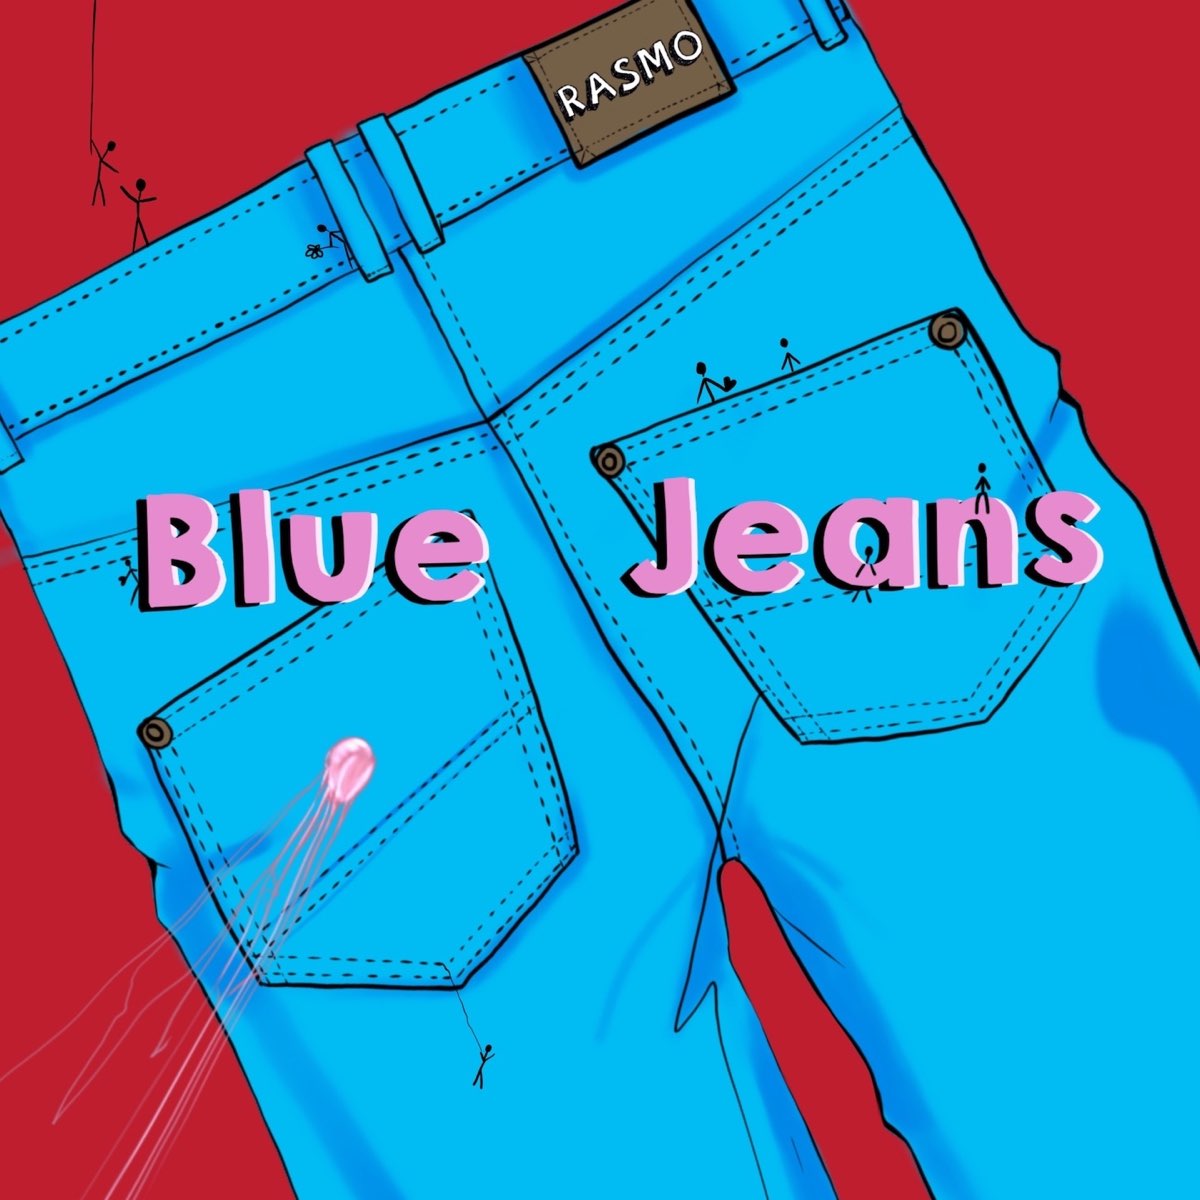 New jeans альбом. OMG New Jeans album. New Jeans first album Art. New Jeans album scan.